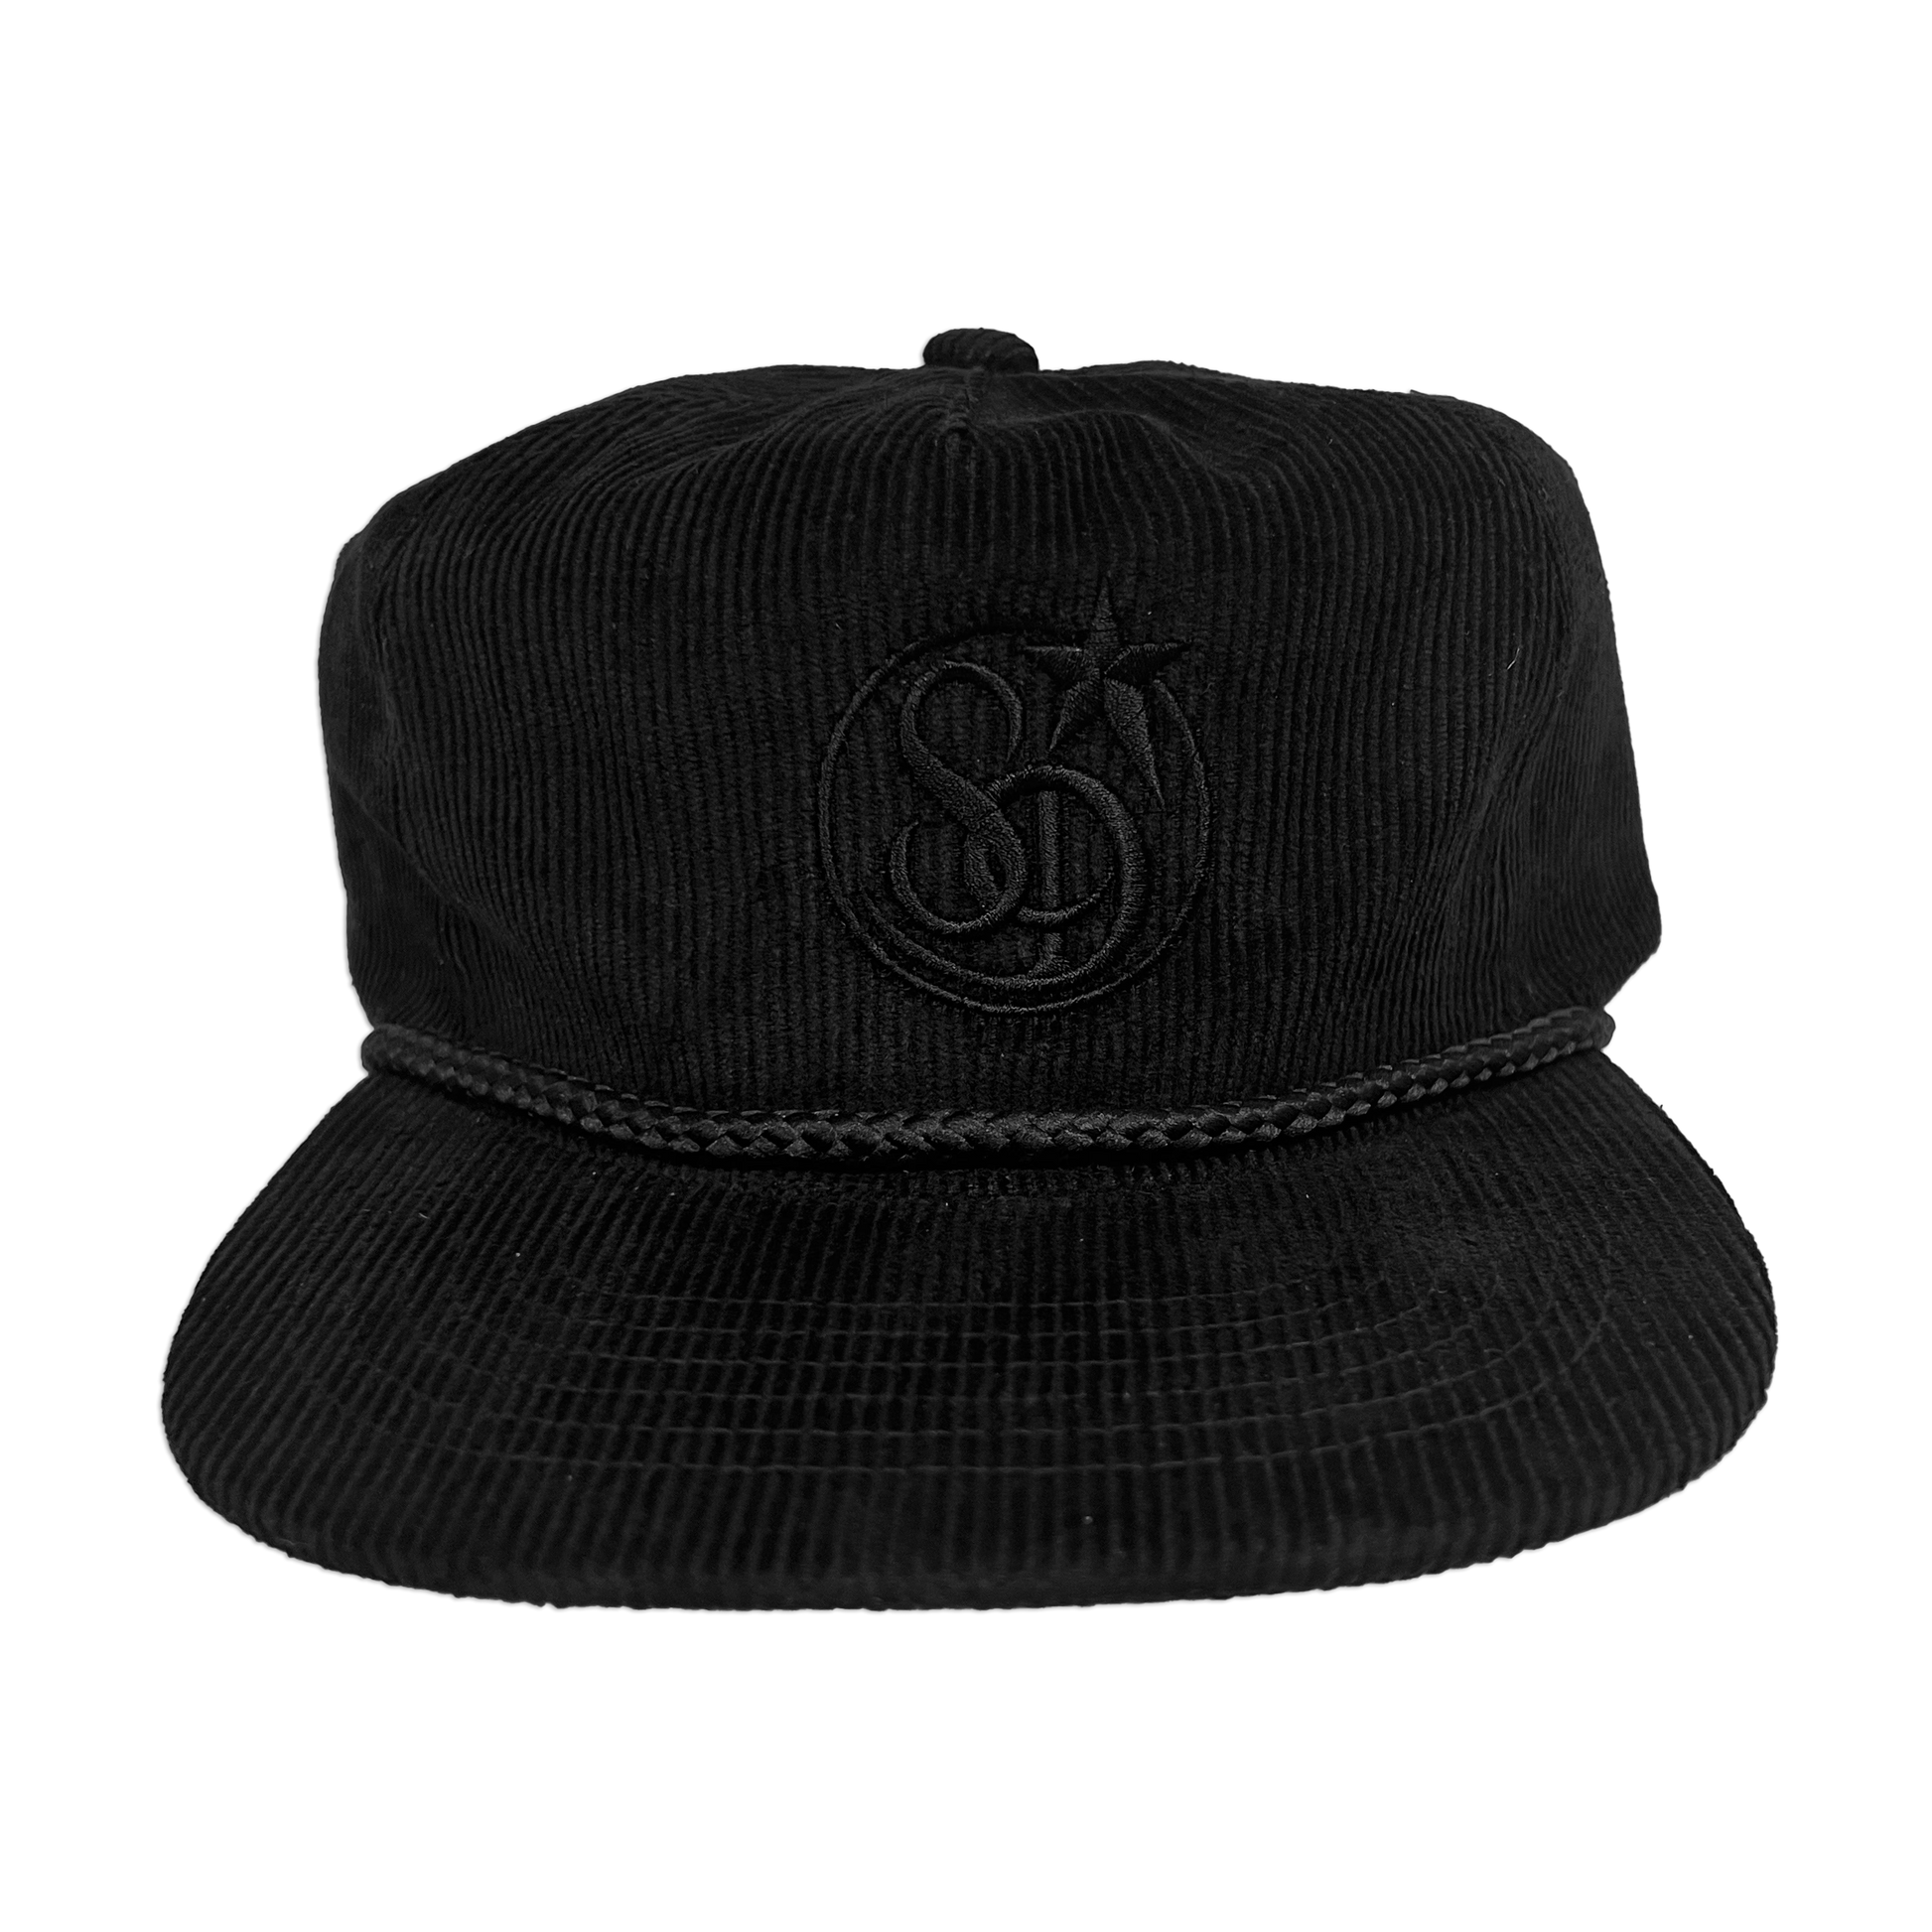 Stardust Wanderlust Lettermark Corduroy Snapback Hat 004 Black / Black